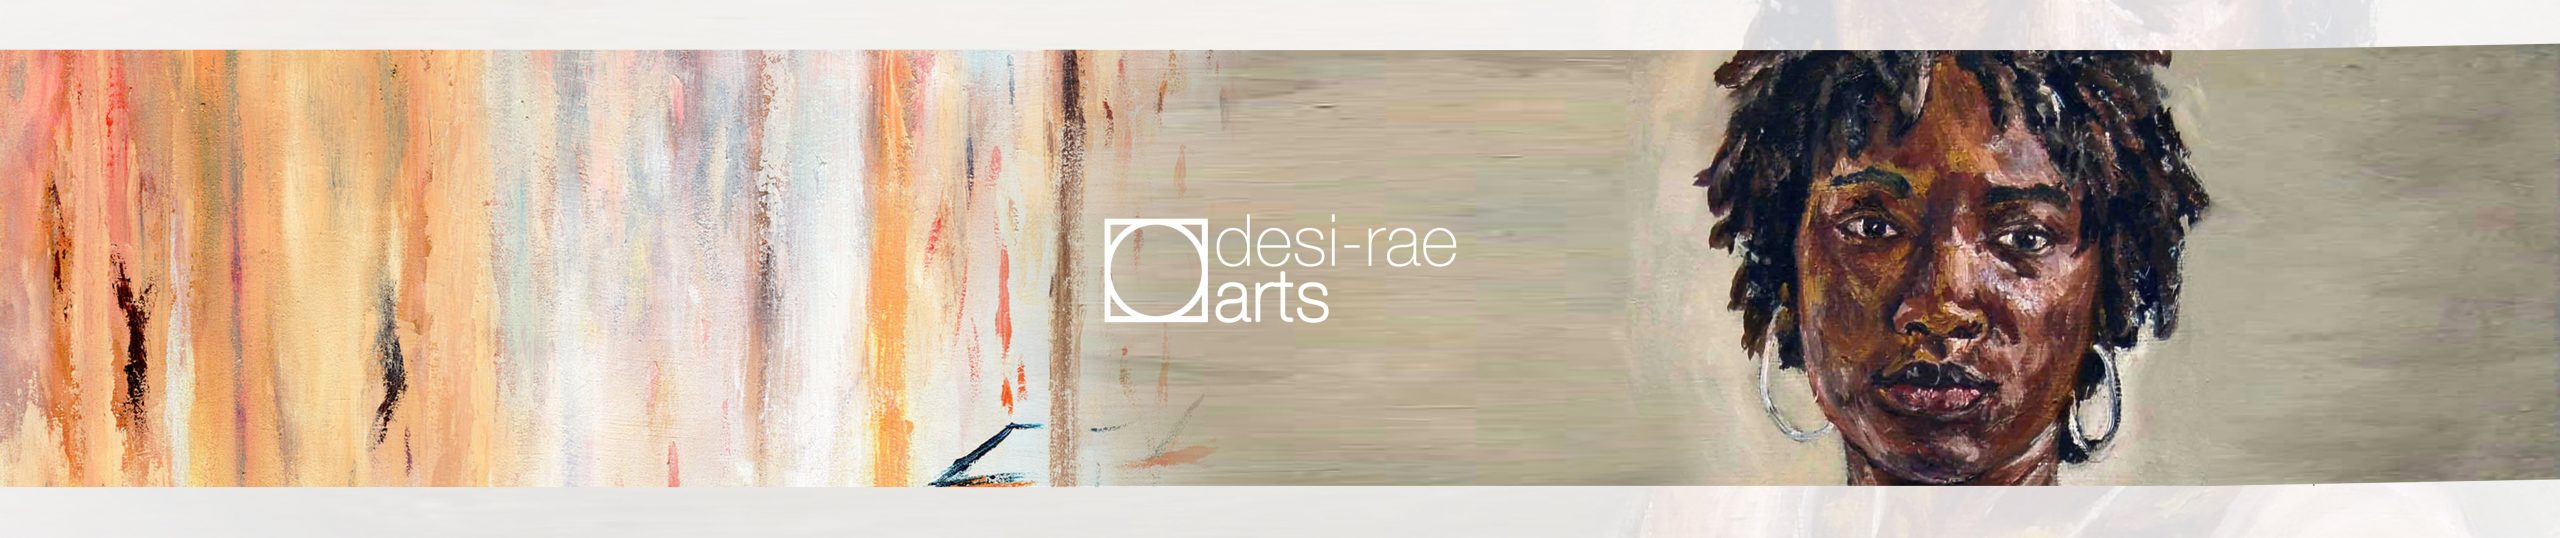 DESI-RAE ARTS ETHICAL ARTIST  